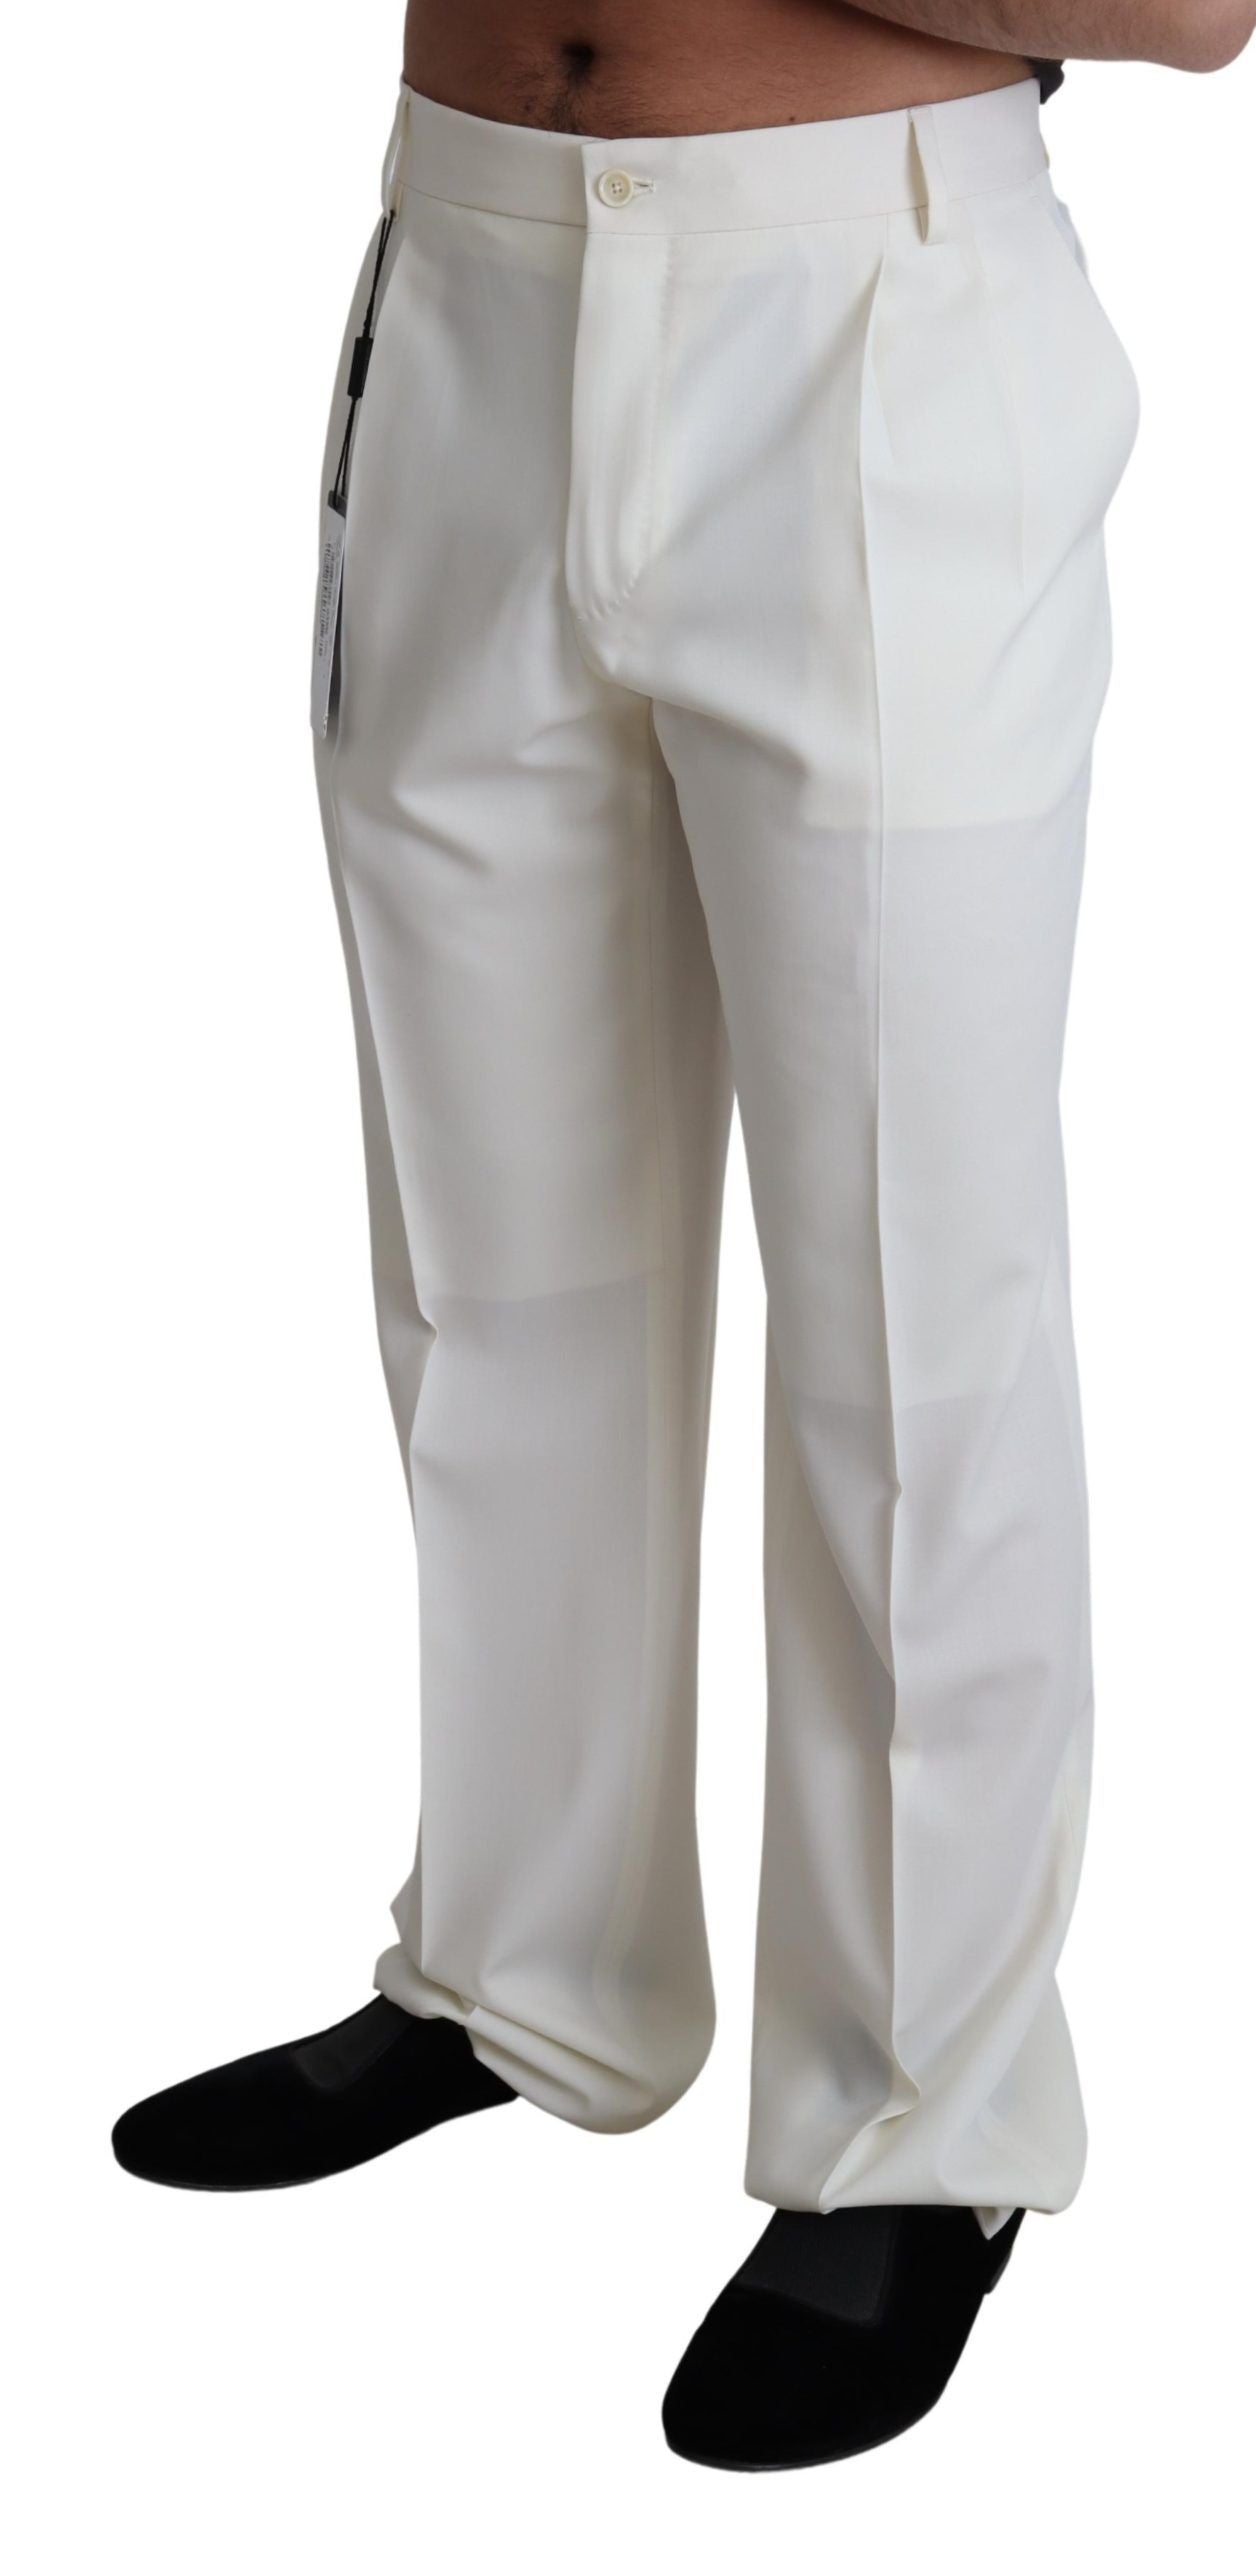 White Virgin Wool Dress Formal Trouser  Pants